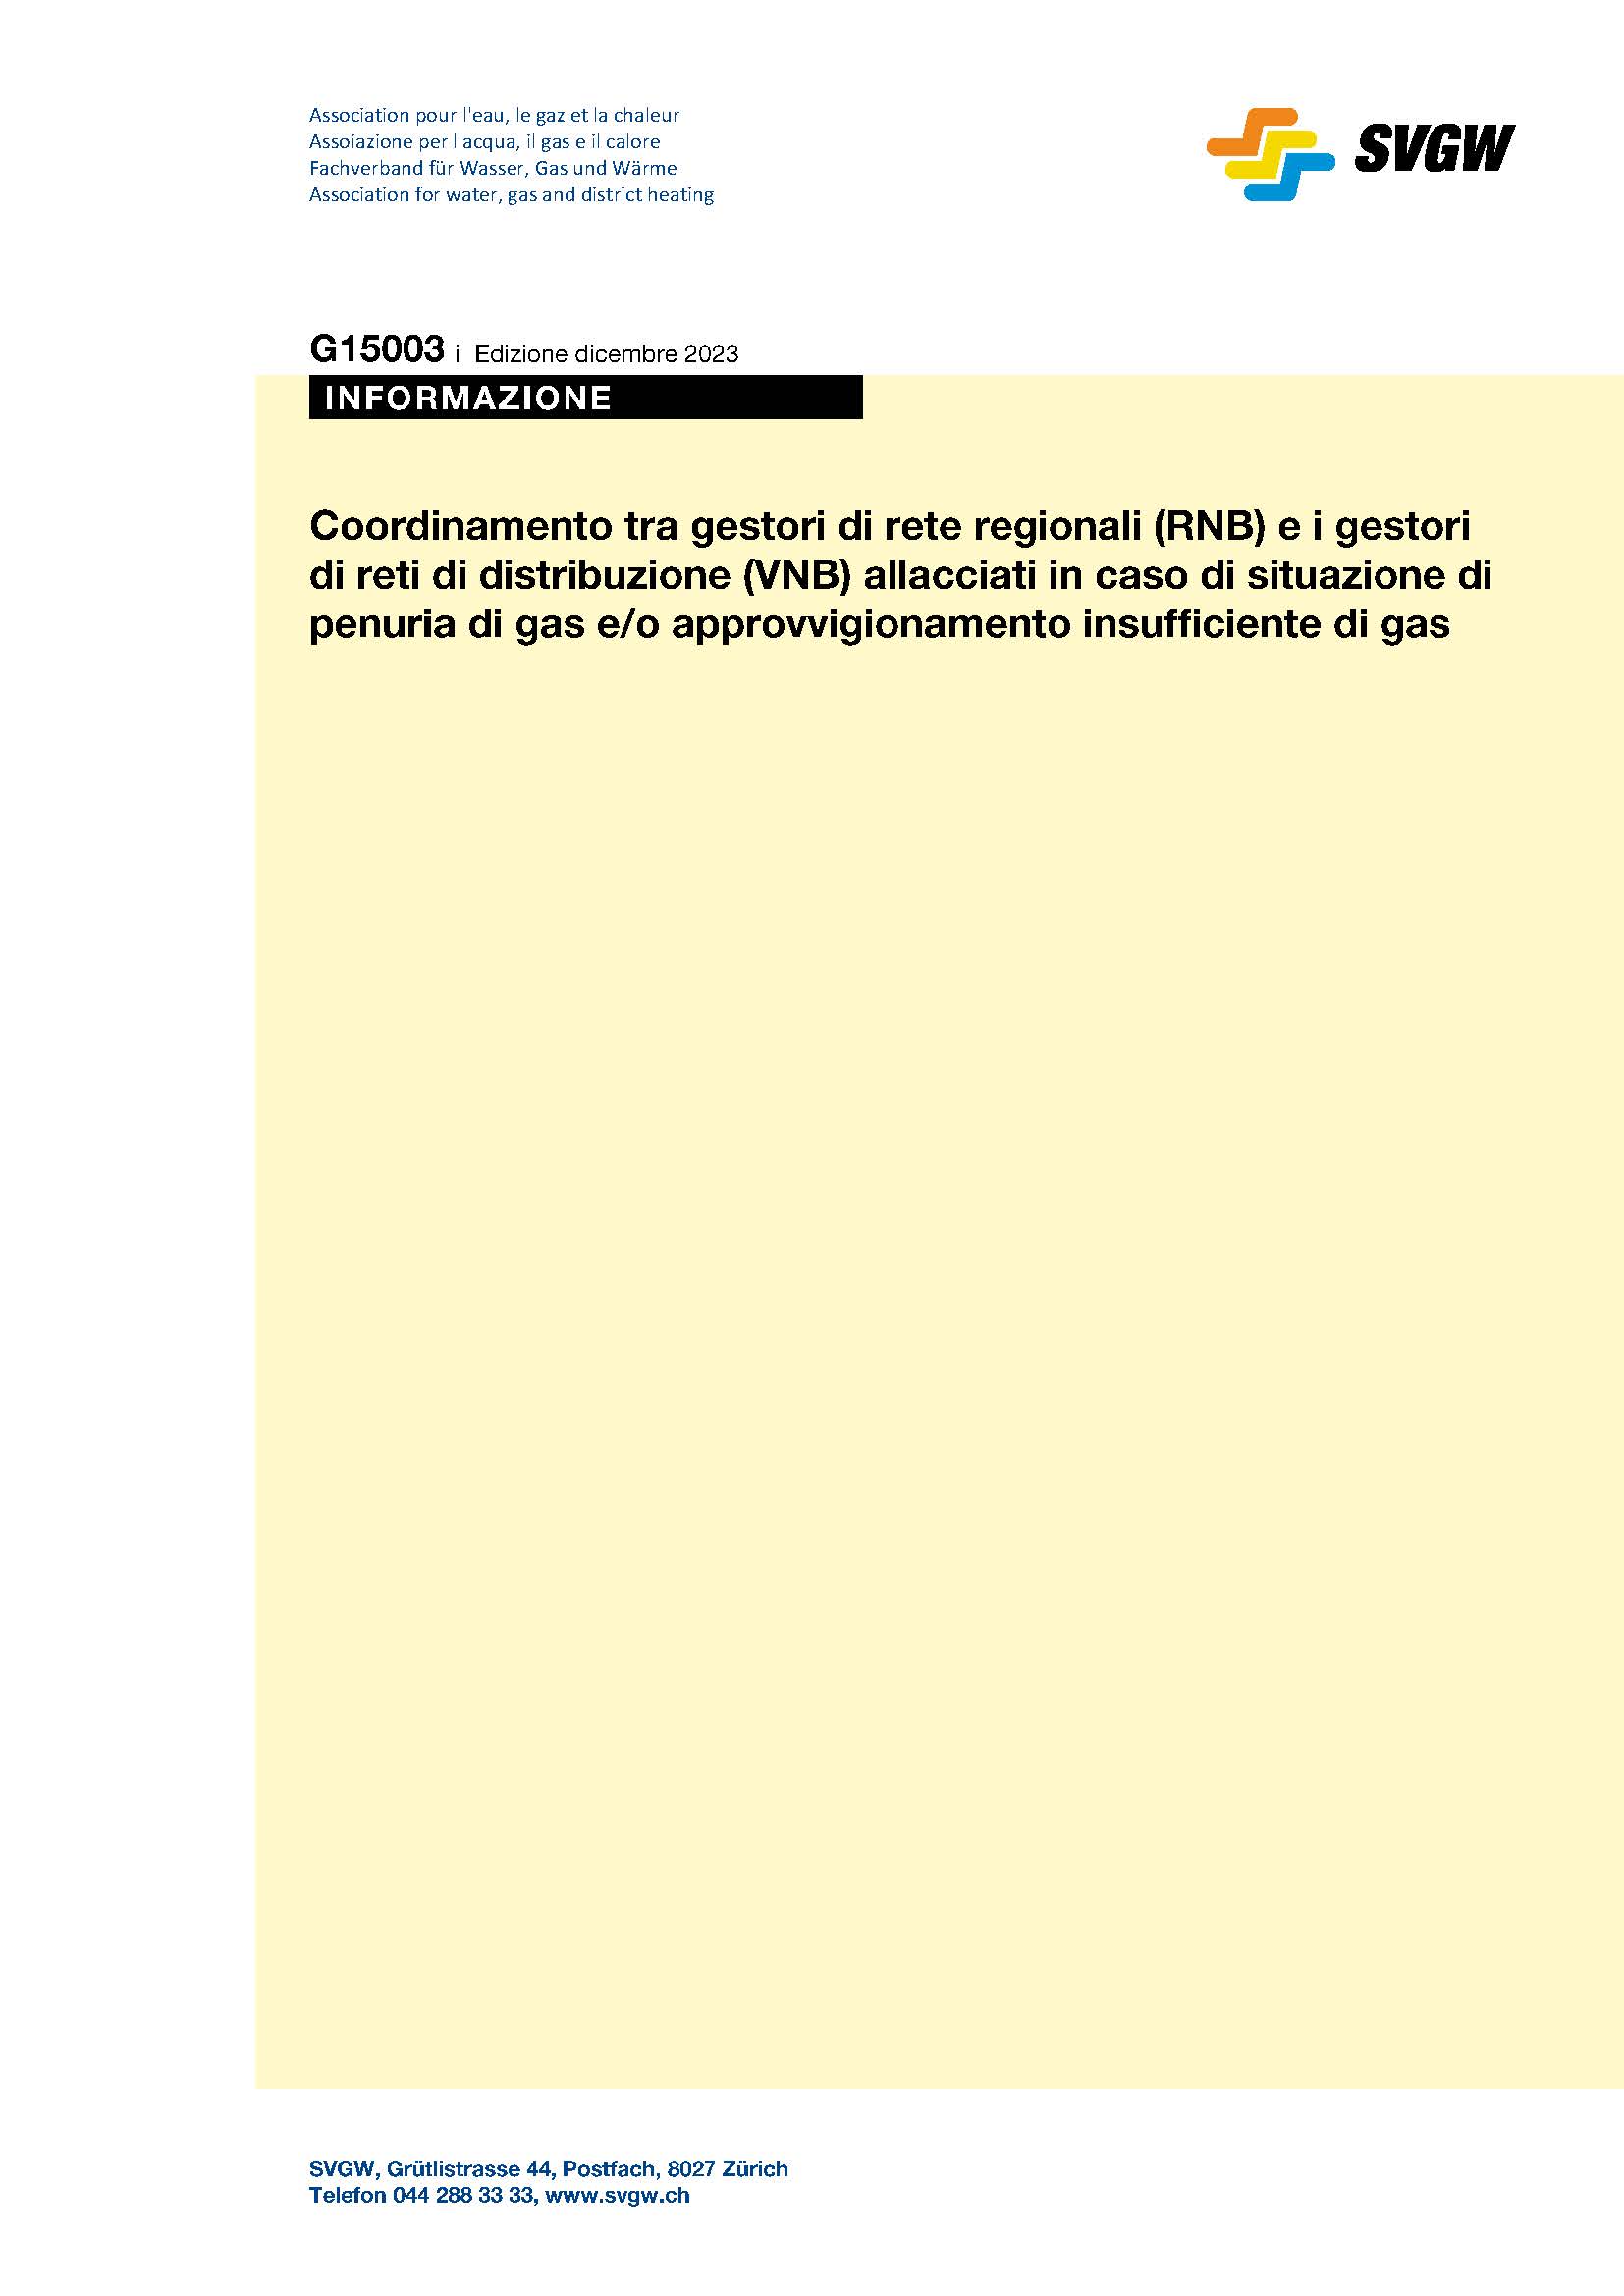 G15003 i Informazione; Coordinamento tra gestori di rete regionali (RNB) e i gestori di reti di distribuzione (VNB) allacciati in caso die situazione di penuria die gas e/o approvvigionamento insufficiente di gas